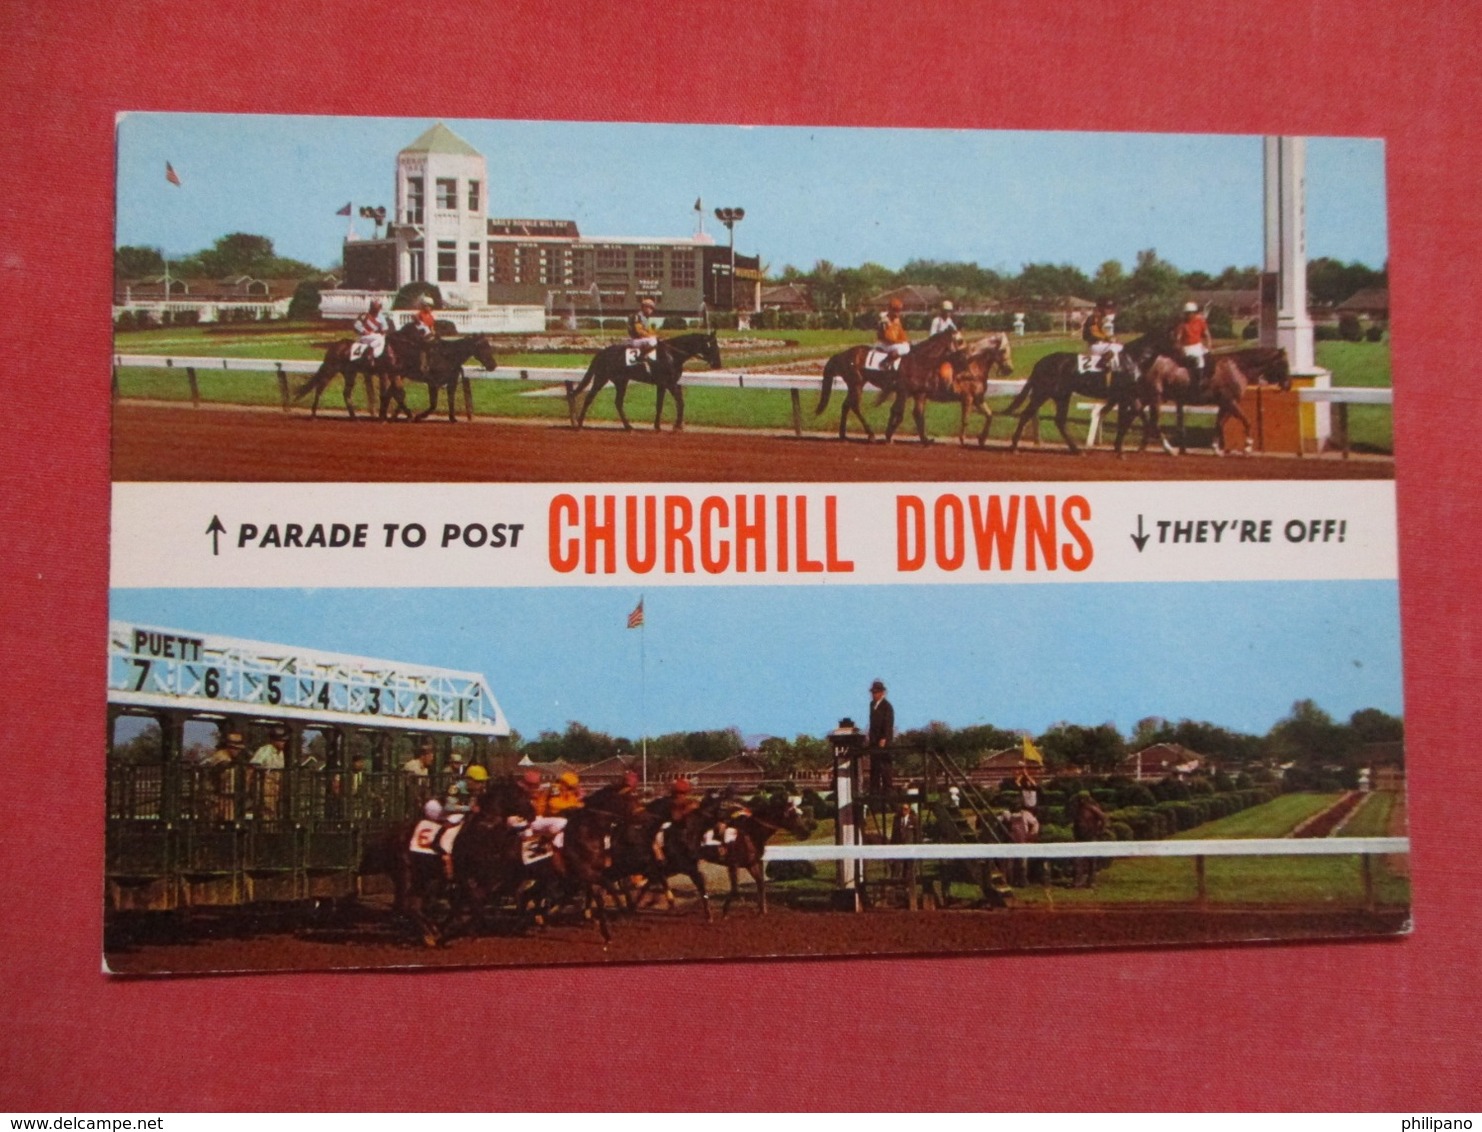 Greetings Churchill Downs  Horse Racing   Kentucky > Louisville   Ref    3587 - Louisville